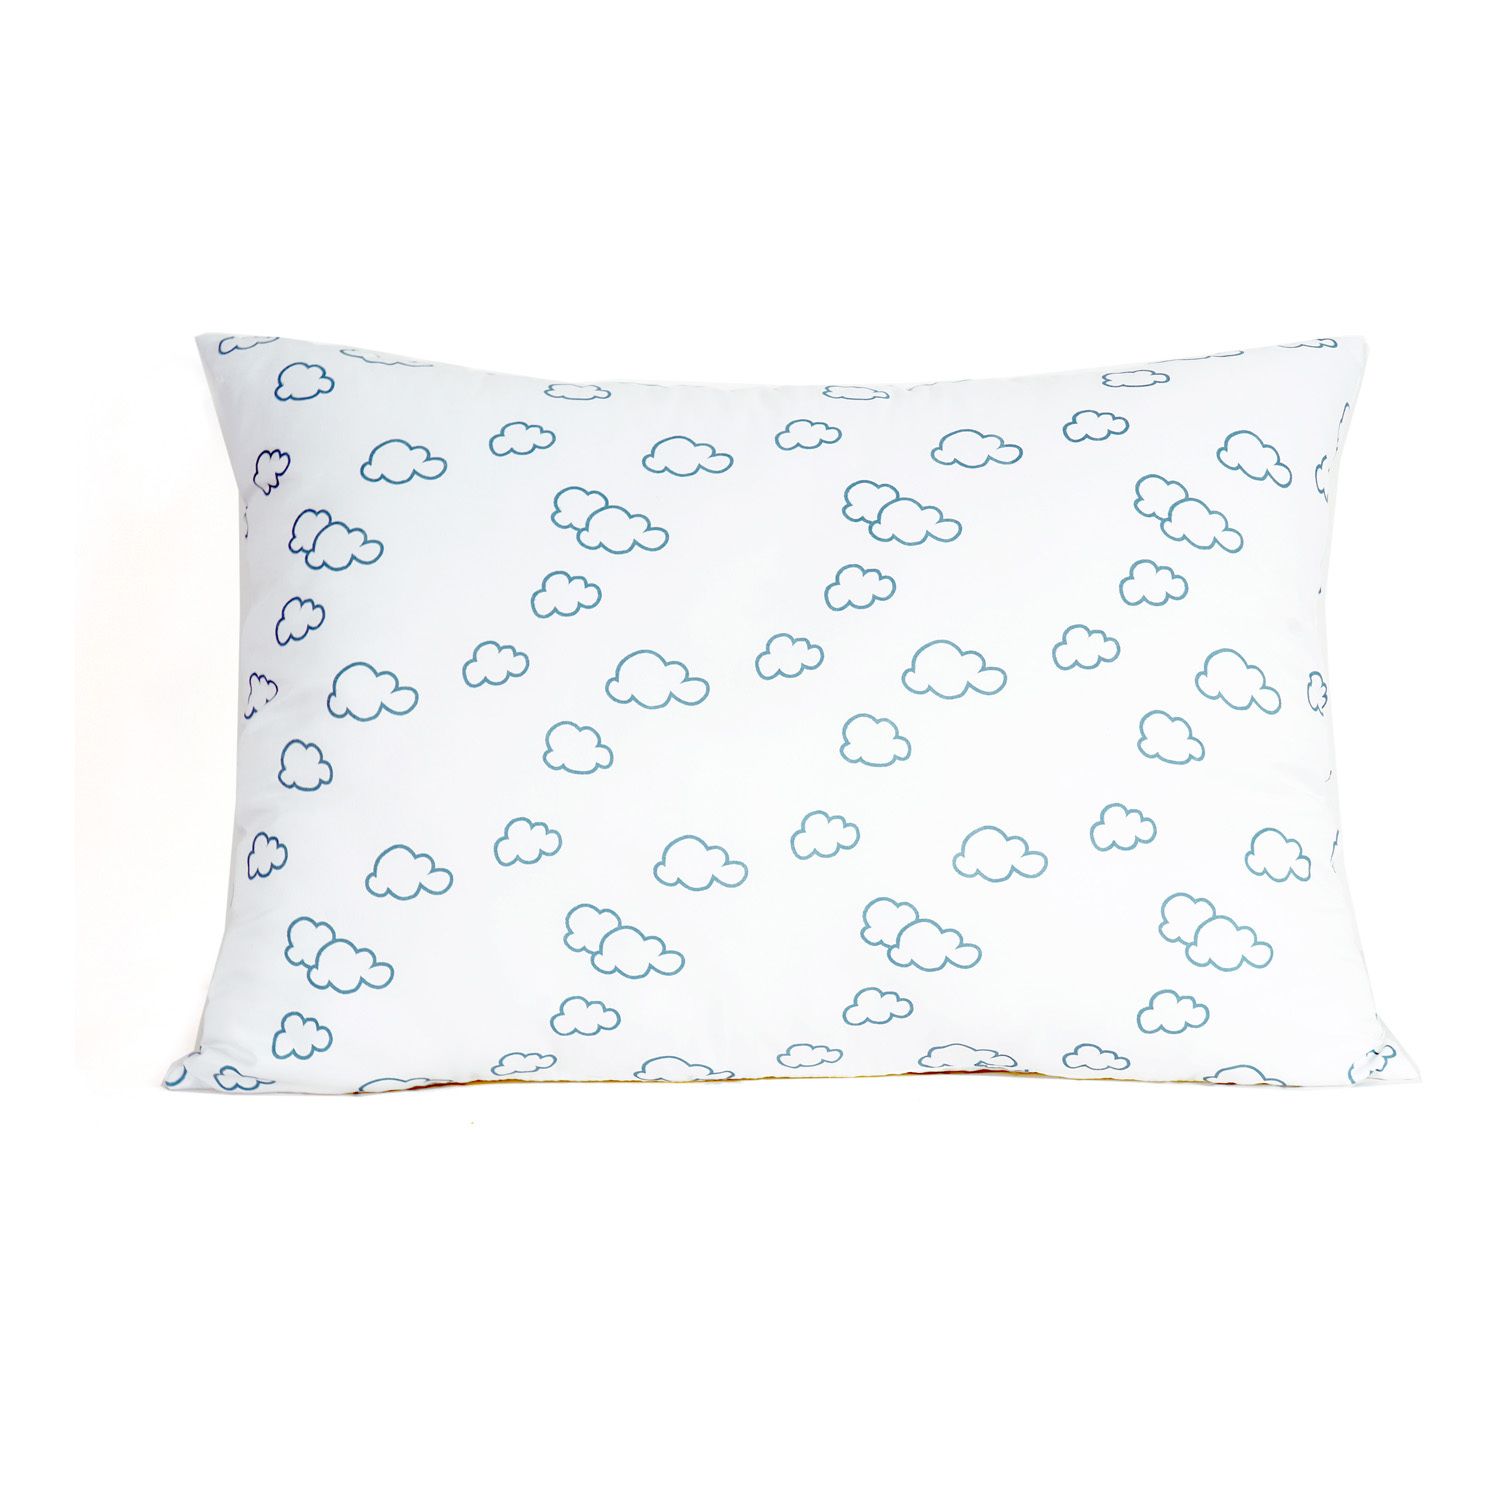 Image for Down Home Springloft Single Printed Jumbo Pillow at Kohl's.